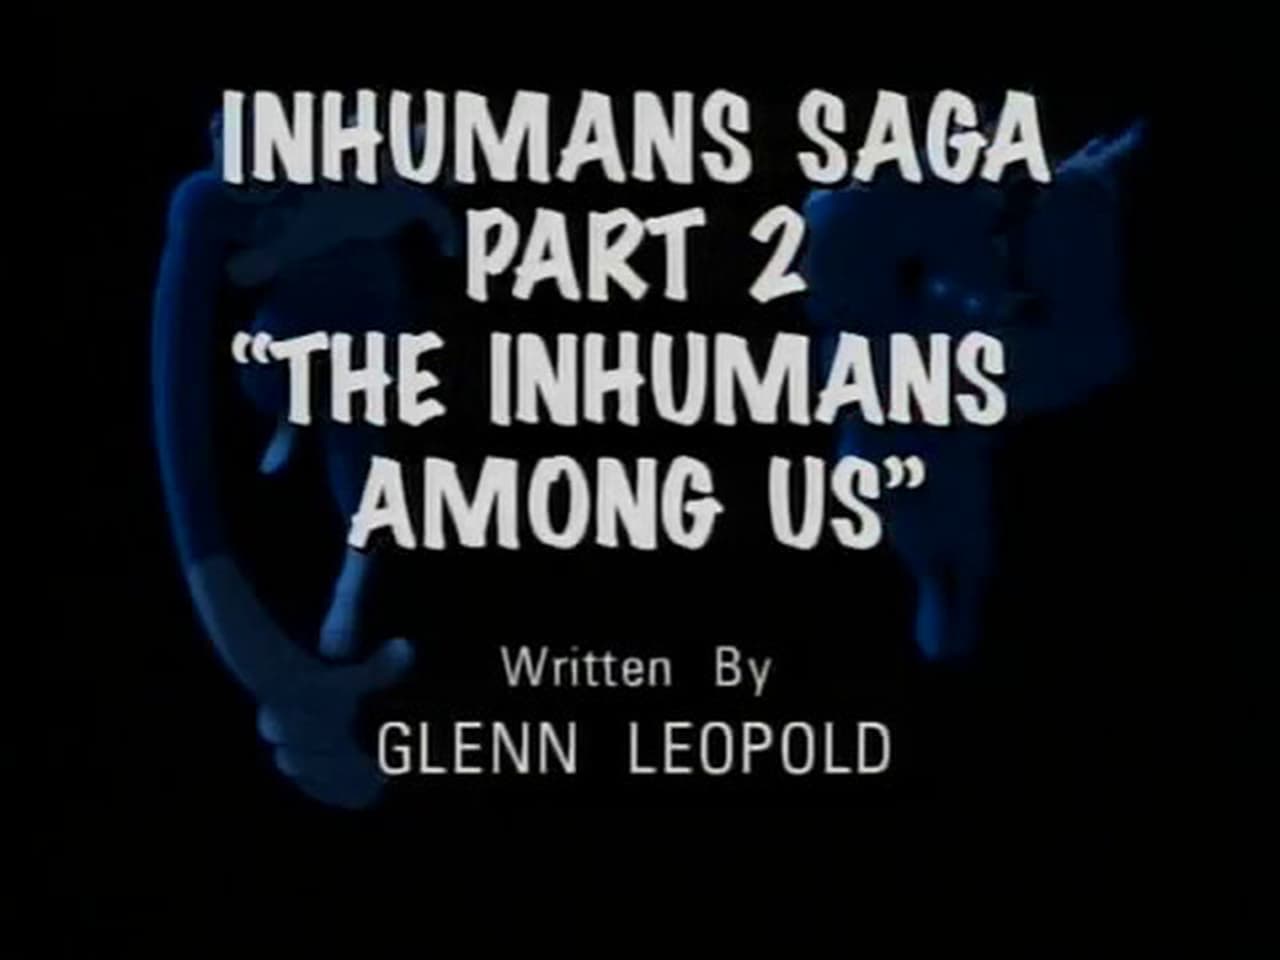 Inhumans Saga Part 2 The Inhumans Among Us